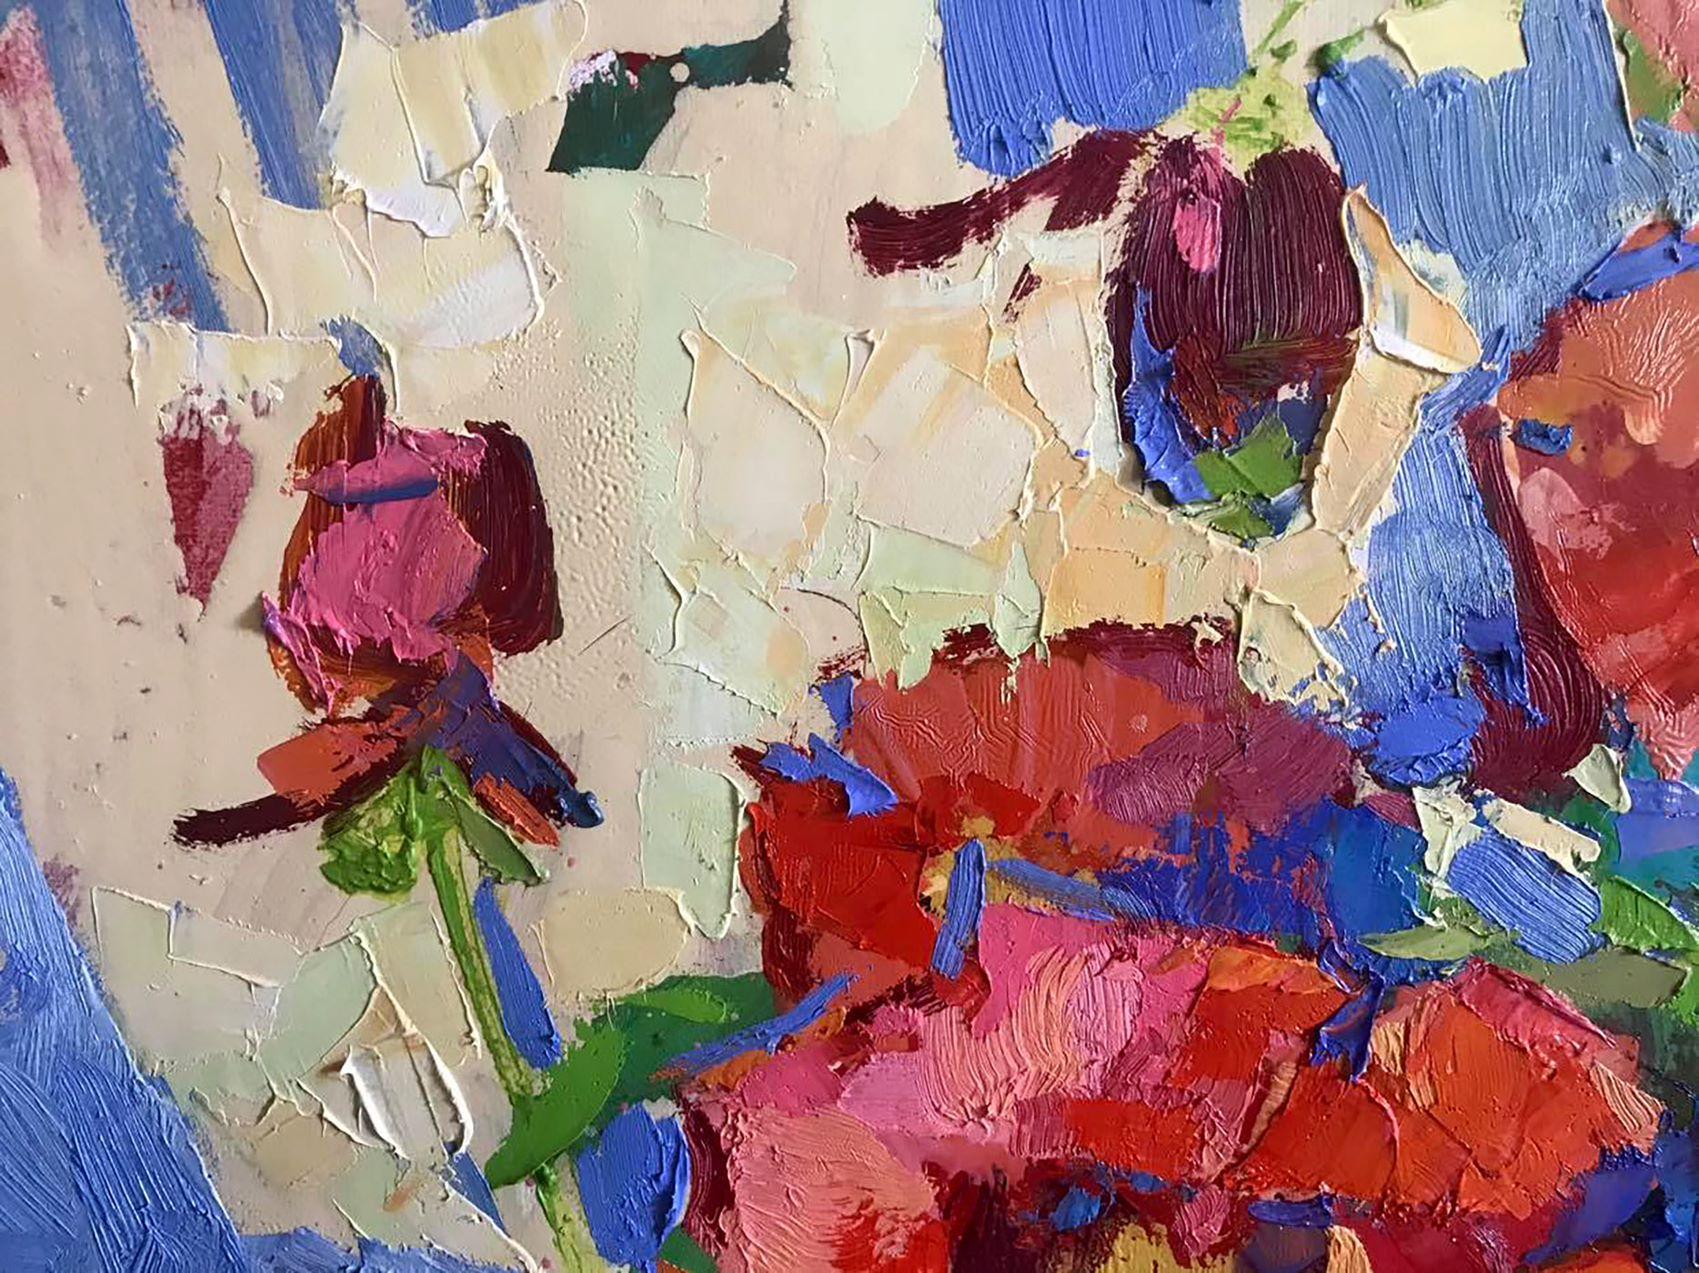 Artist: Oksana Kalenyuk 
Work: Original oil painting, handmade artwork, one of a kind 
Medium: Oil on canvas 
Year: 2020
Style: Impressionism
Title: Poppies Bloom, 
Size: 31.5